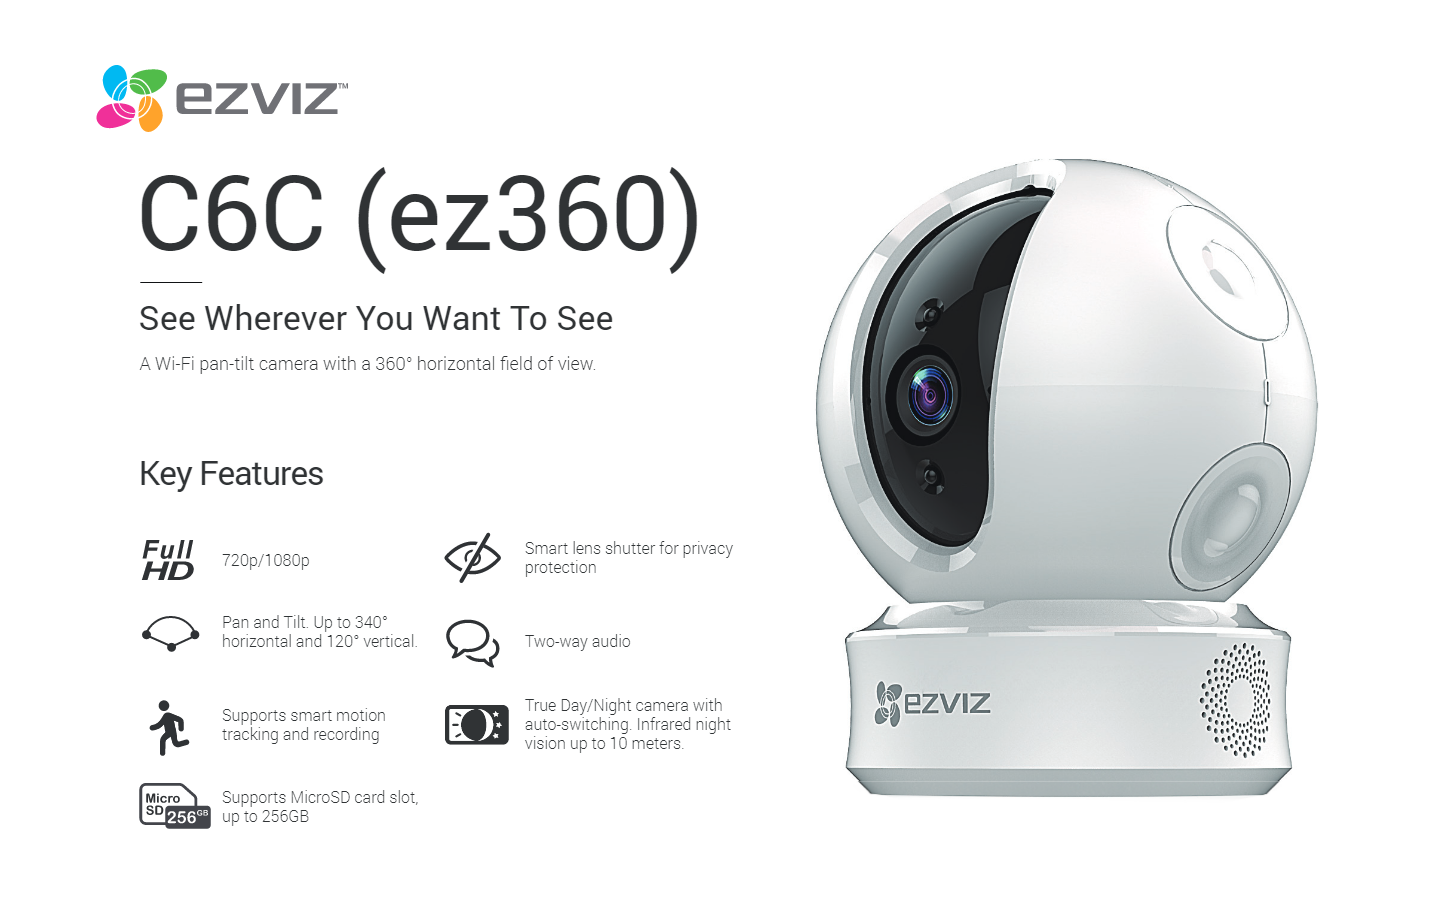 EZVIZ C6C Smart WiFi IP CCTV Solution – 4 CAM Package | IR Night Vision | with Installation | Full HD 1080 | 24Hrs Recording